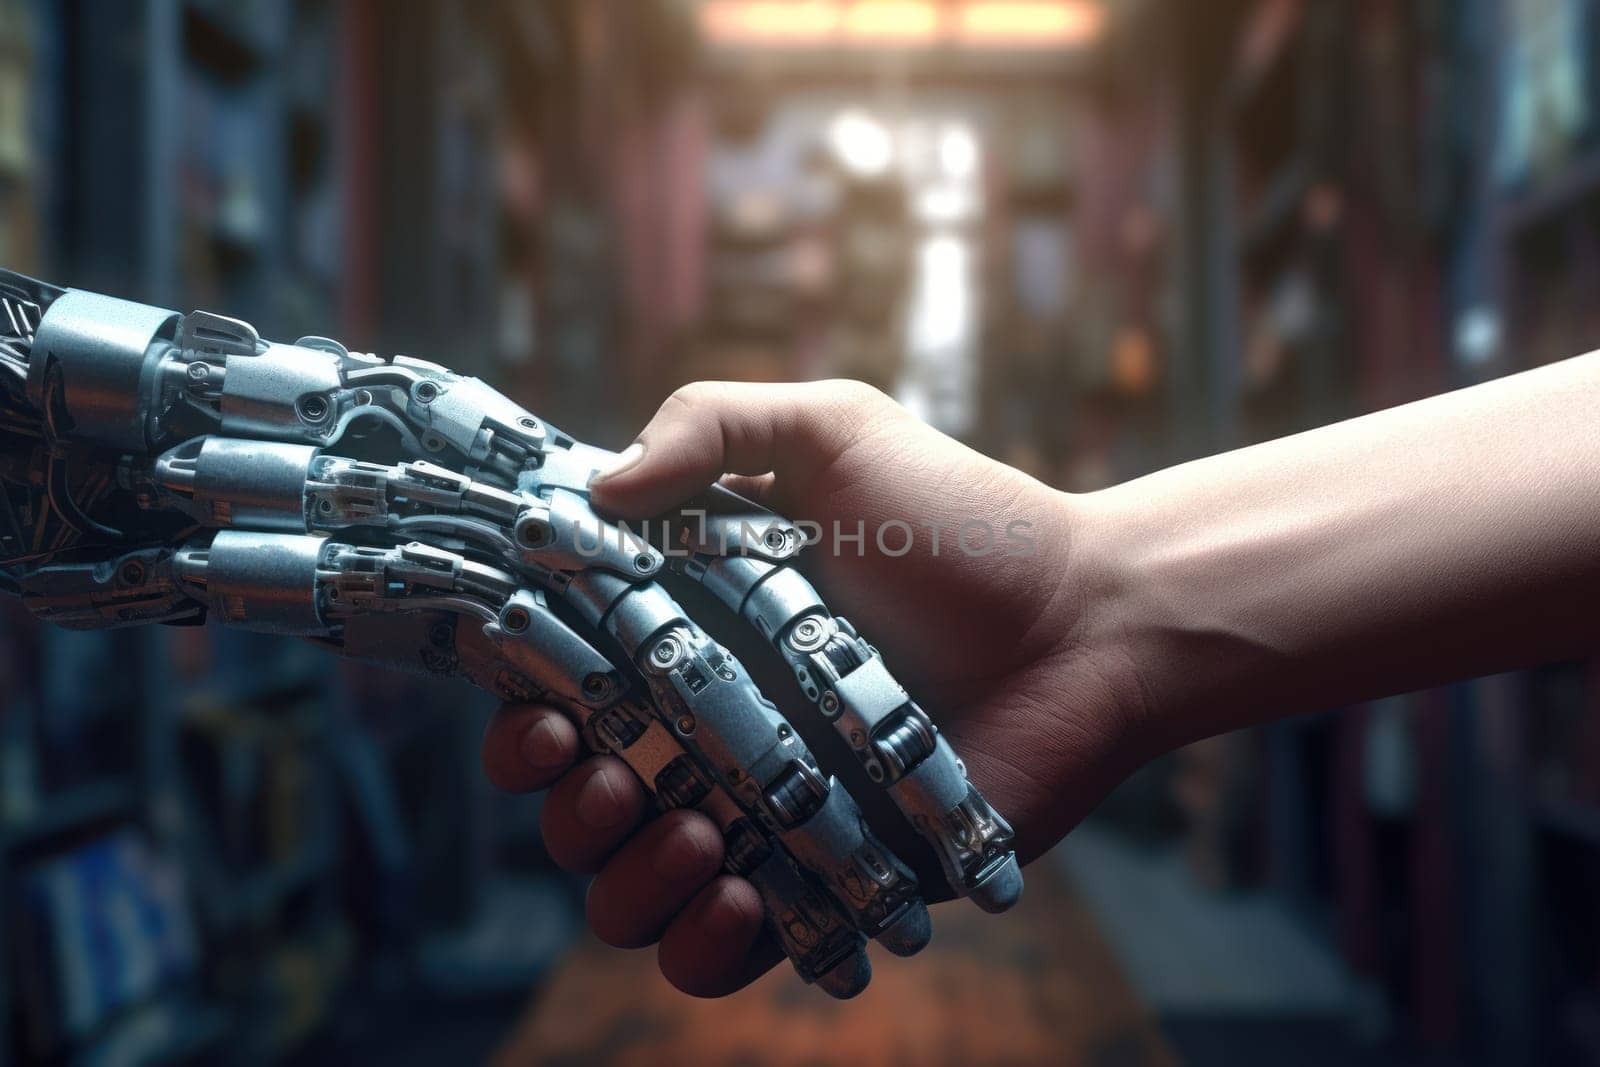 Robot and businessman hands in handshake. Generative AI by matamnad